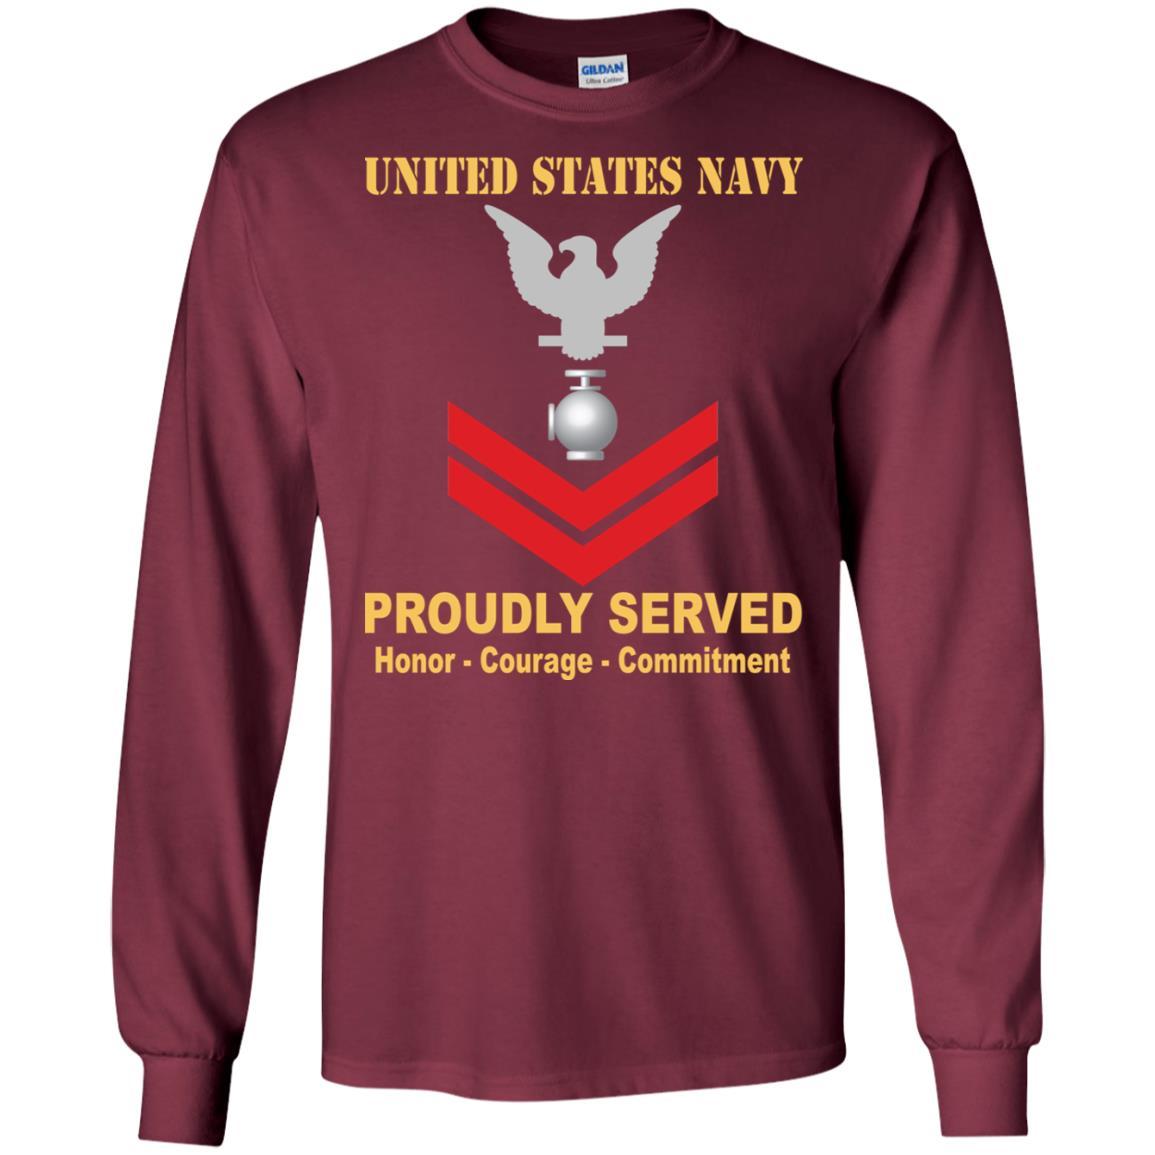 Navy Utilitiesman Navy UT E-5 Rating Badges Proudly Served T-Shirt For Men On Front-TShirt-Navy-Veterans Nation